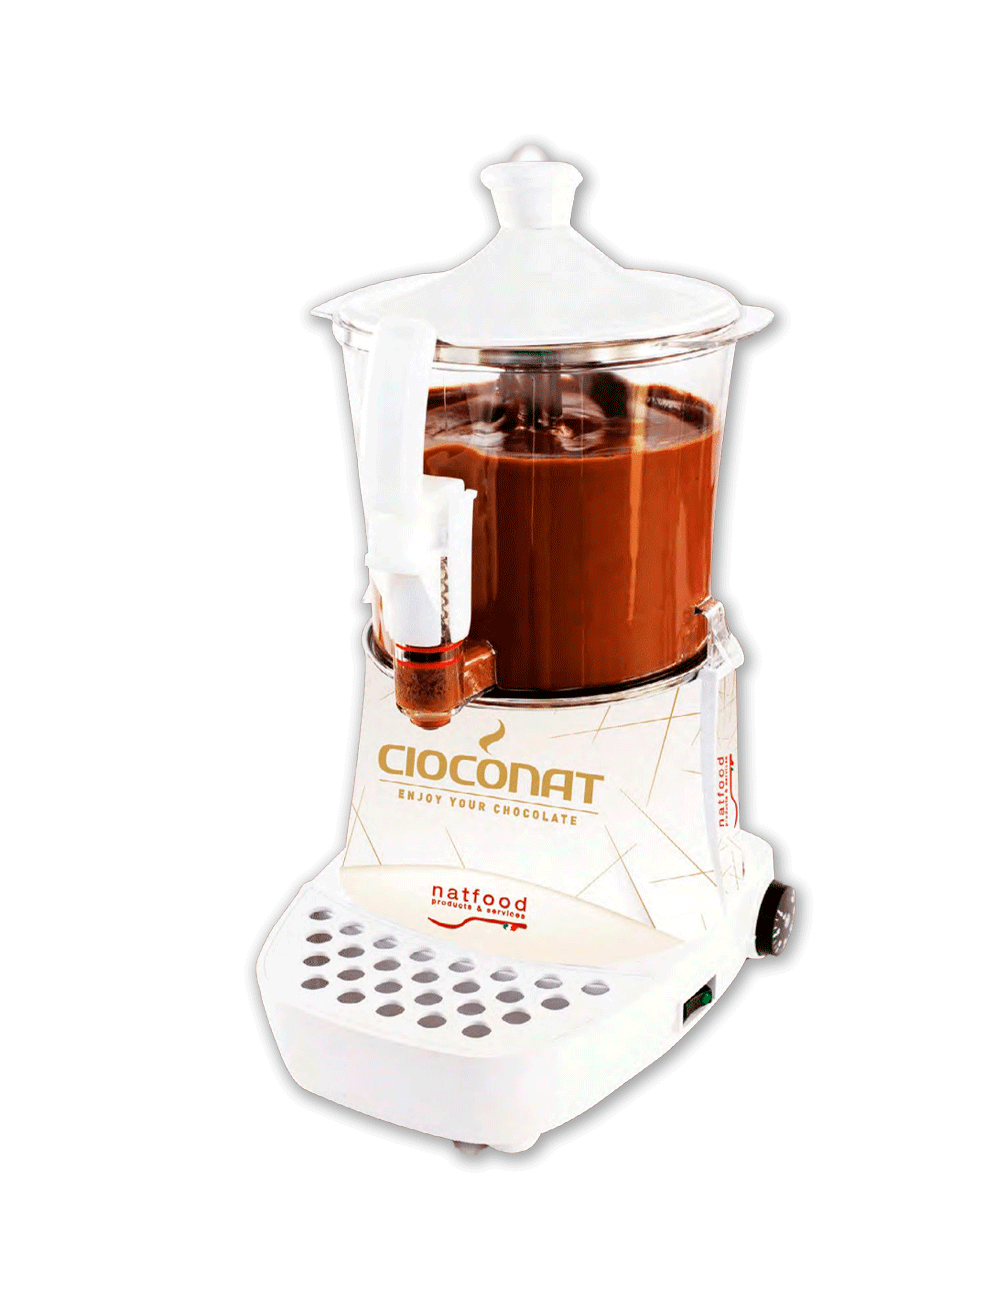 Cioconatiera Cioconat white-gold per cioccolata calda Natfood 5 litri